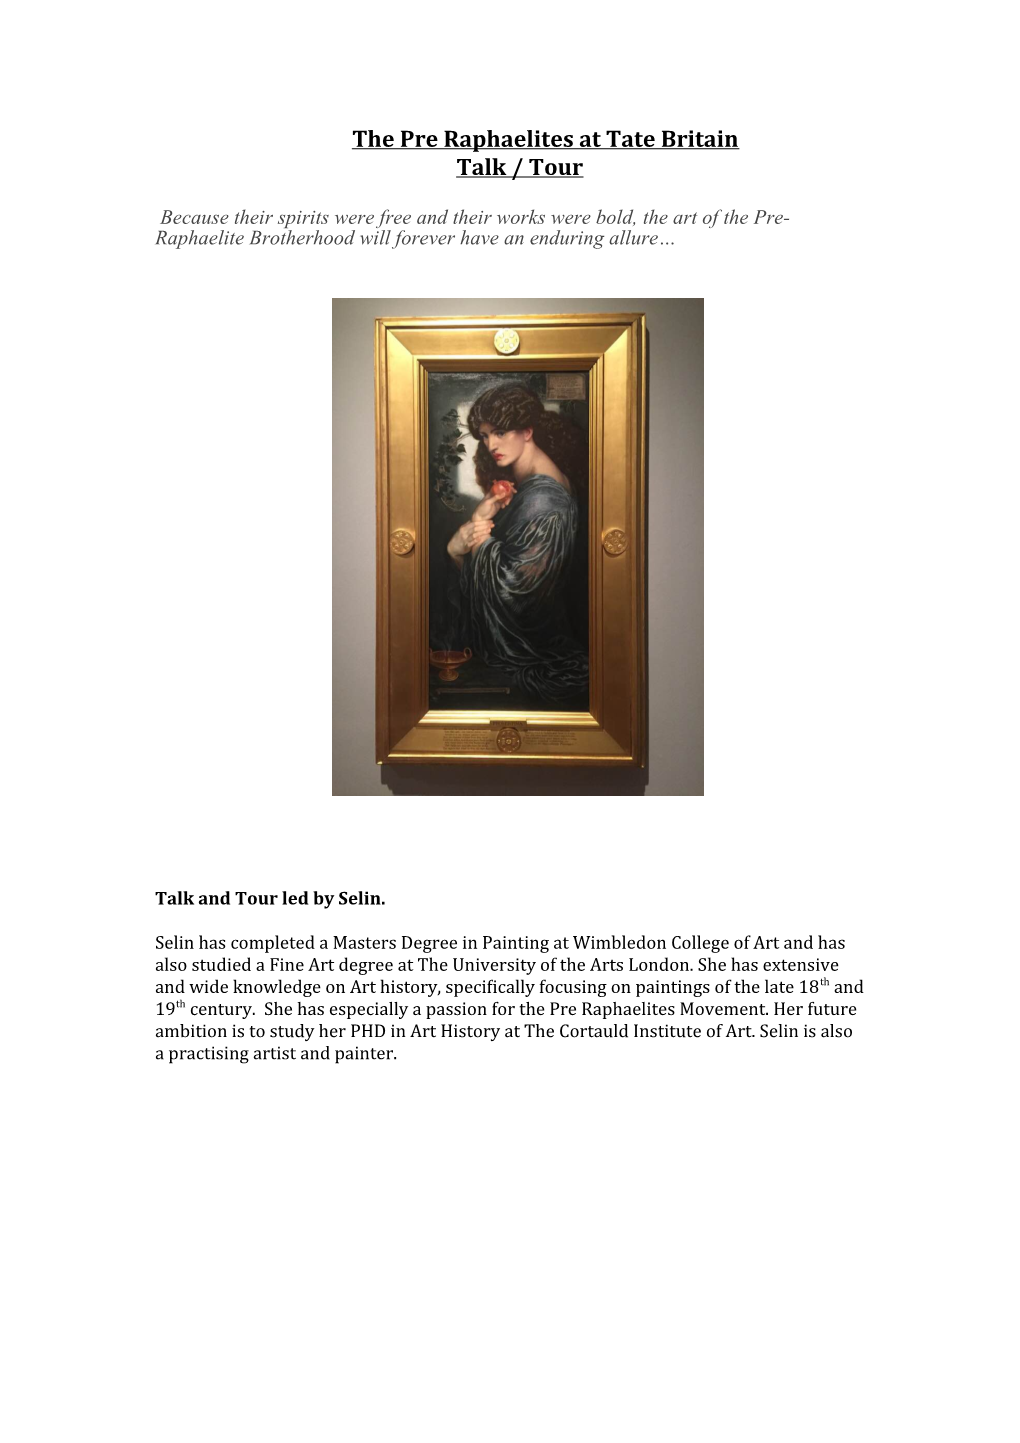 The Pre Raphaelites at Tate Britain Talk / Tour